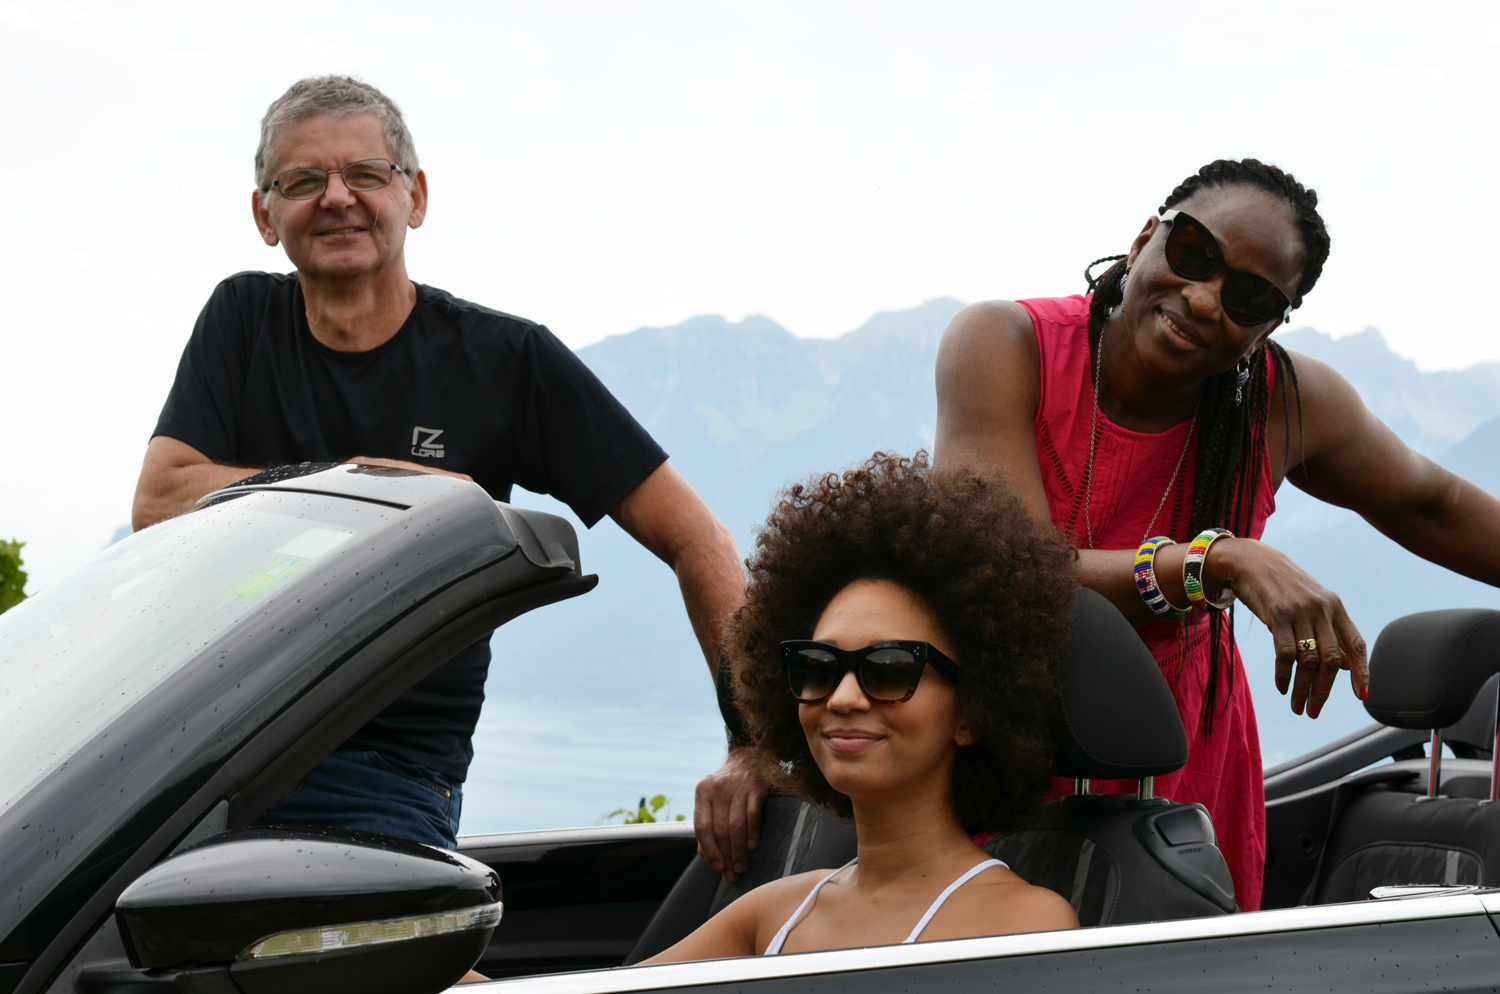 mercredie-blog-geneve-suisse-voyage-my-switzerland-grand-tour-roadtrip-europcar-accor-new-beetle-cabriolet-famille-decapotable